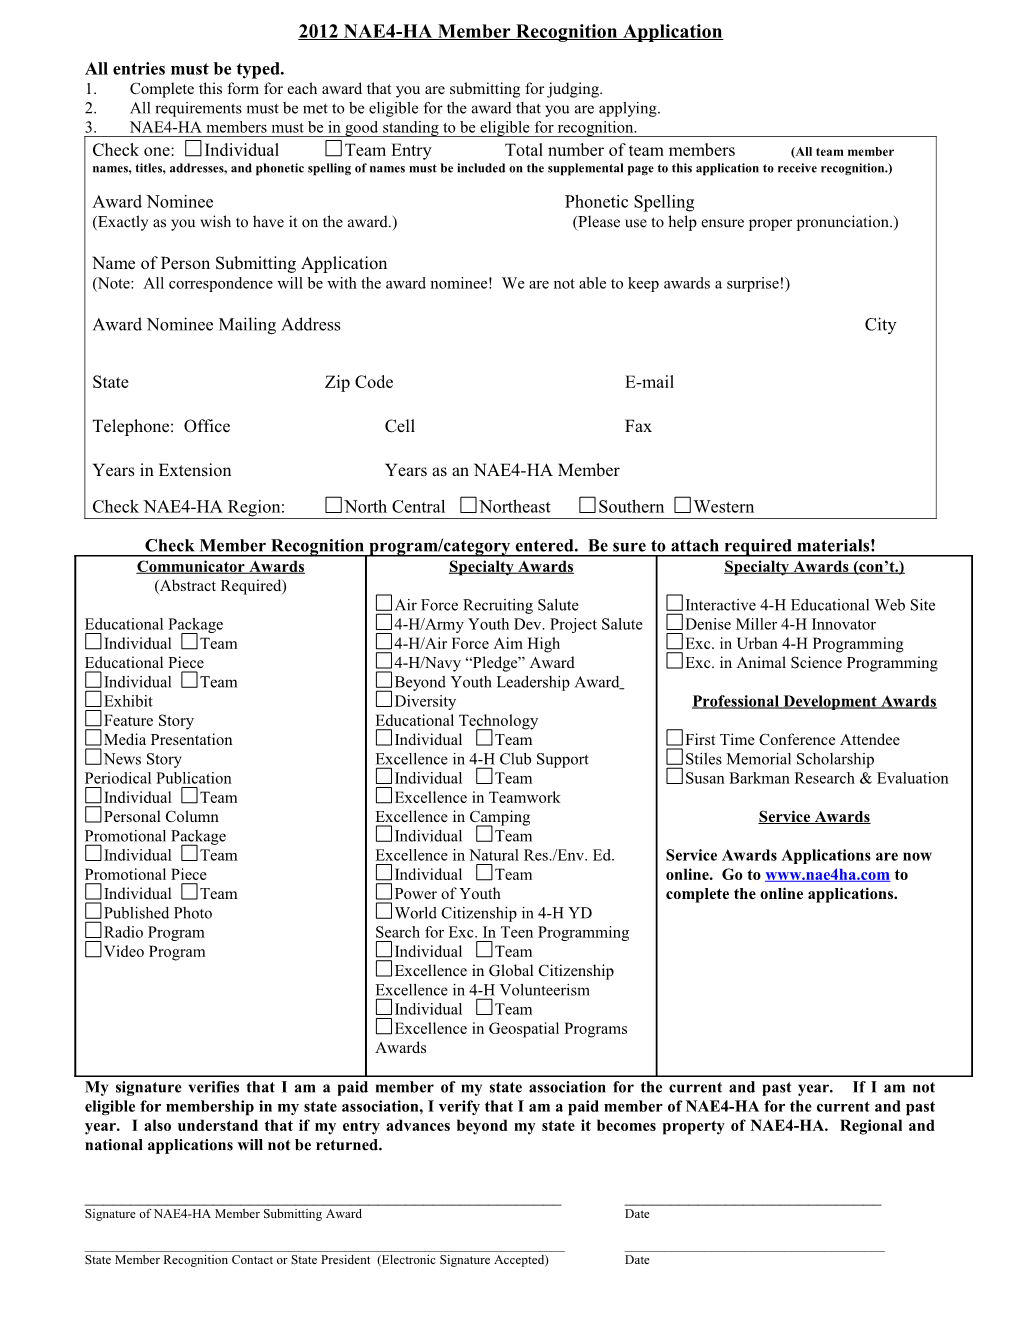 2007 NAE4-HA Member Recognition Application